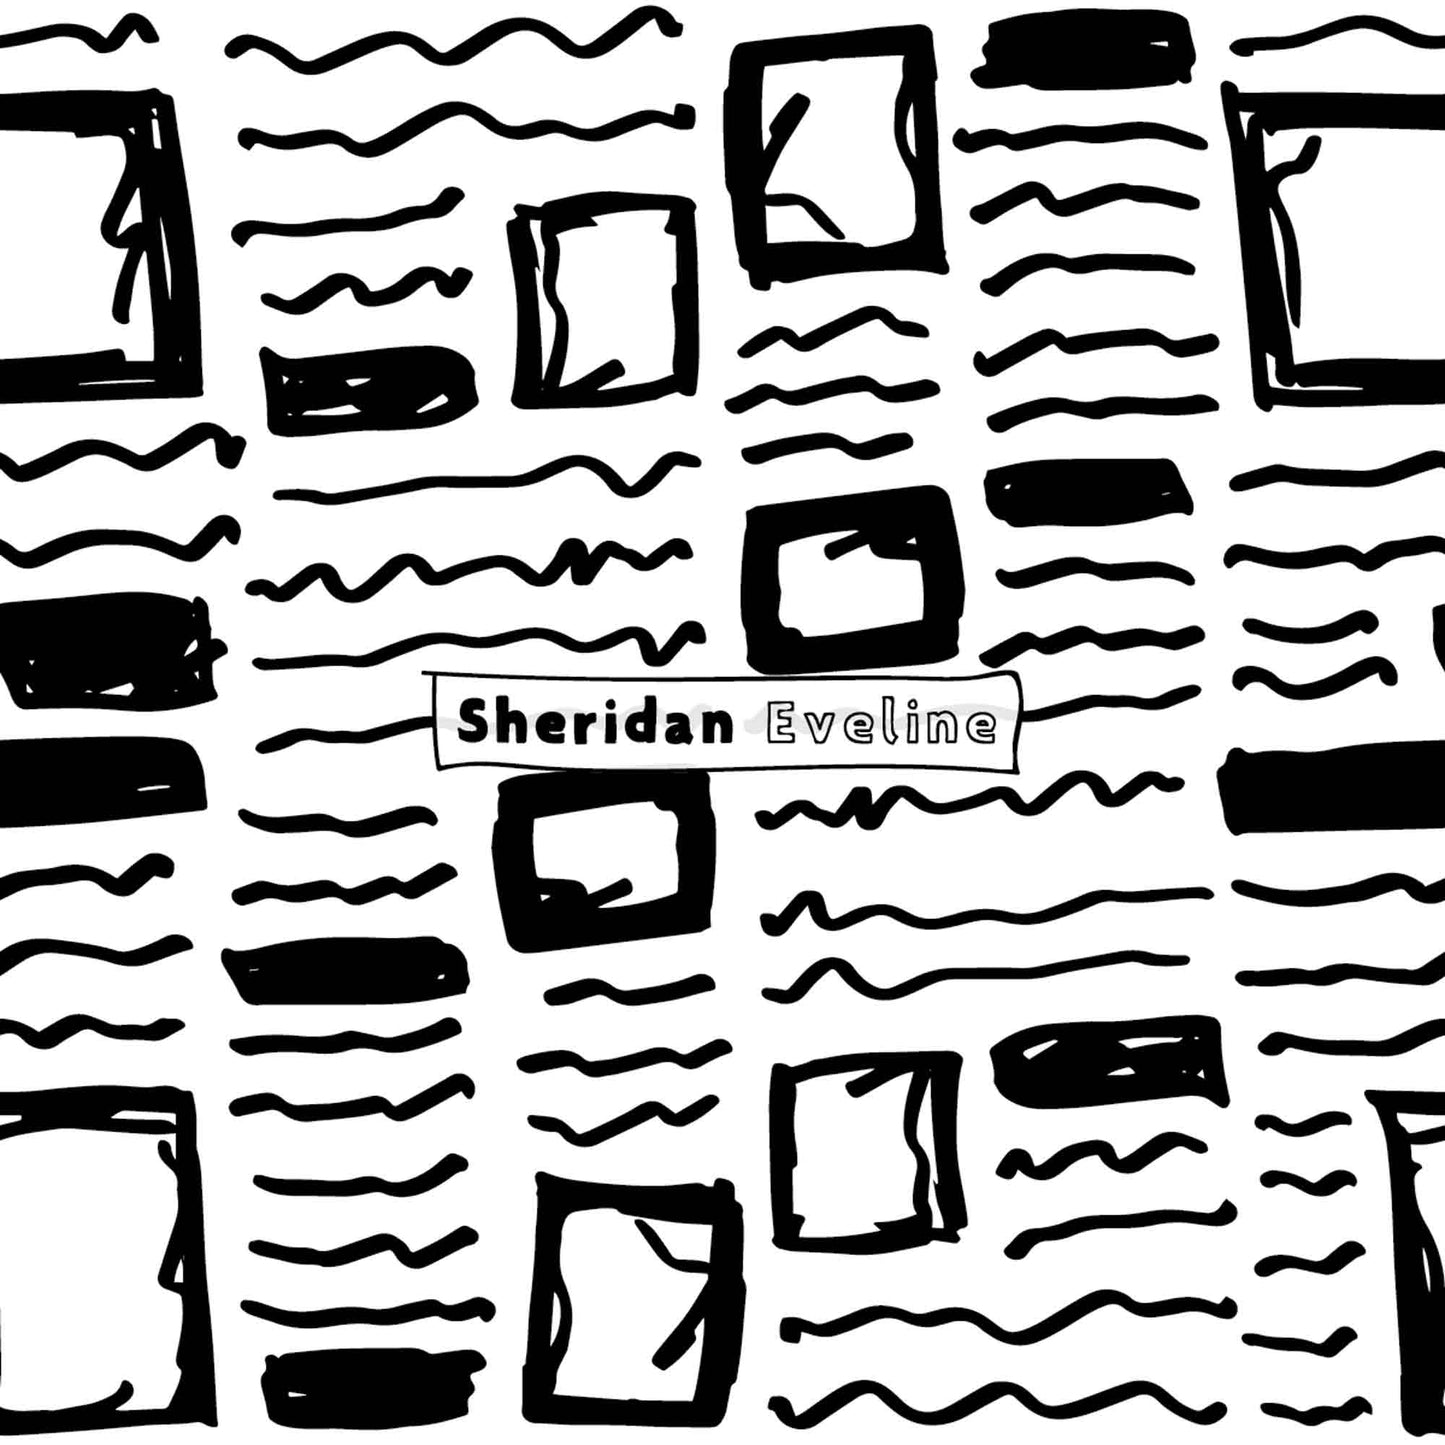 Sheridan Eveline - Brisbane Surface Pattern Designer - Black & White Pattern - Better Read